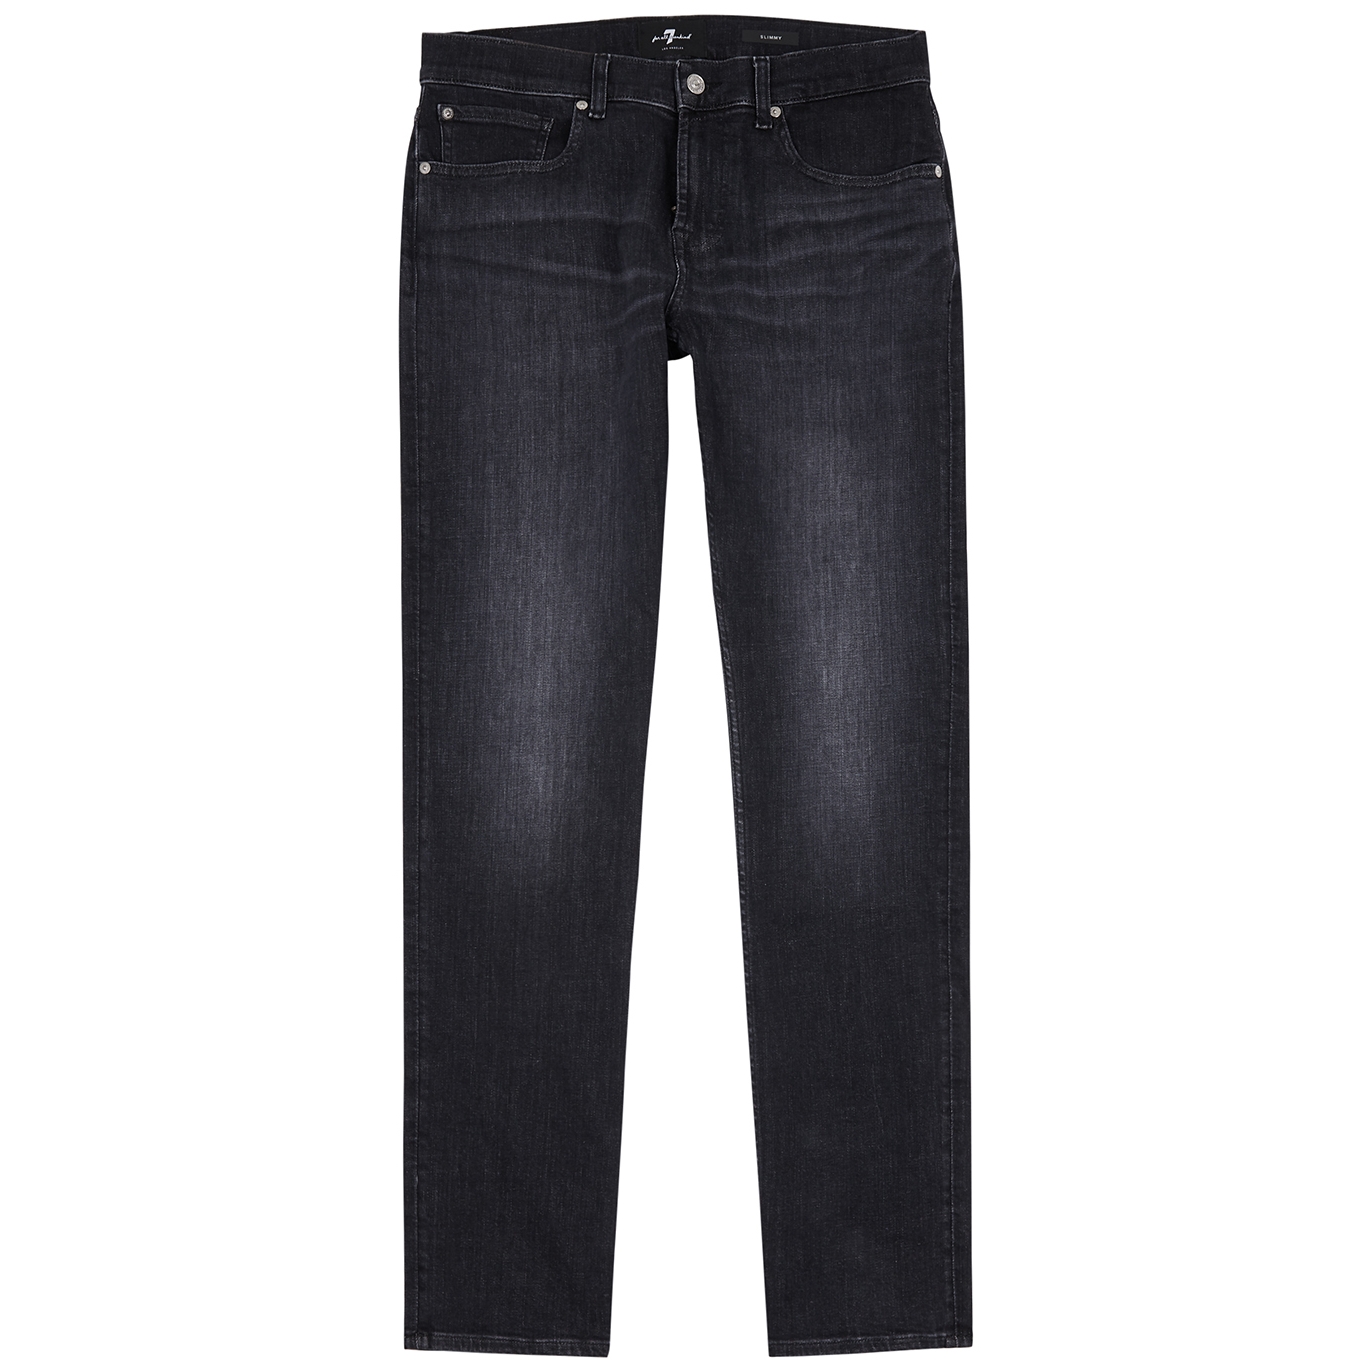 7 For All Mankind Slimmy Black Slim-leg Jeans, Denim Jeans, Black - W28